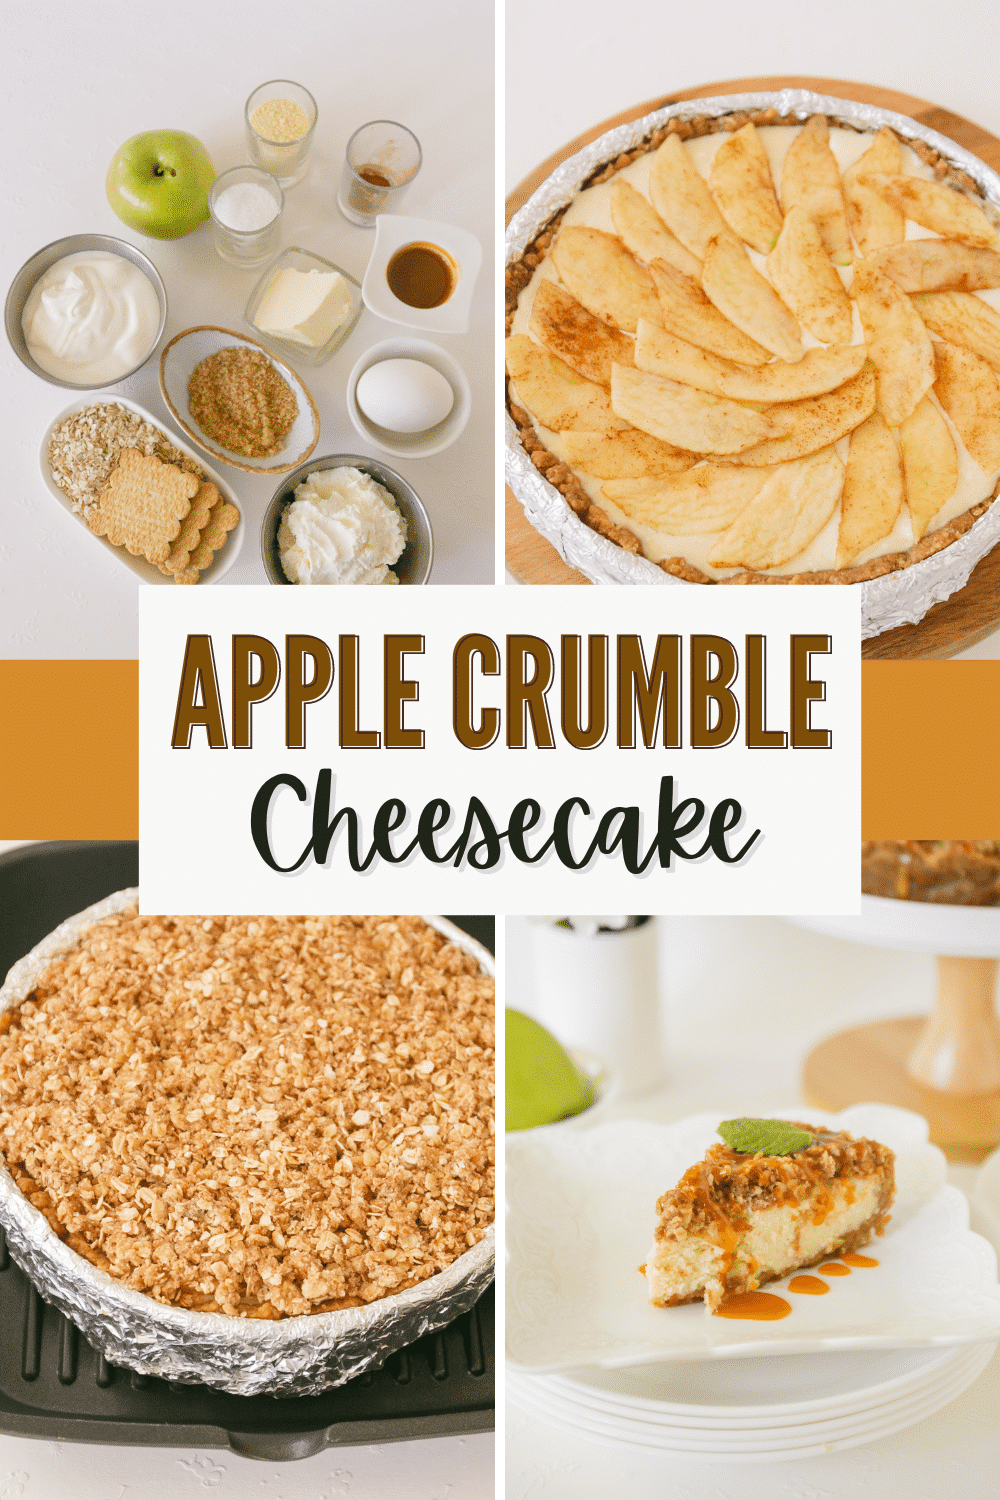 Apple crumble cheesecake.